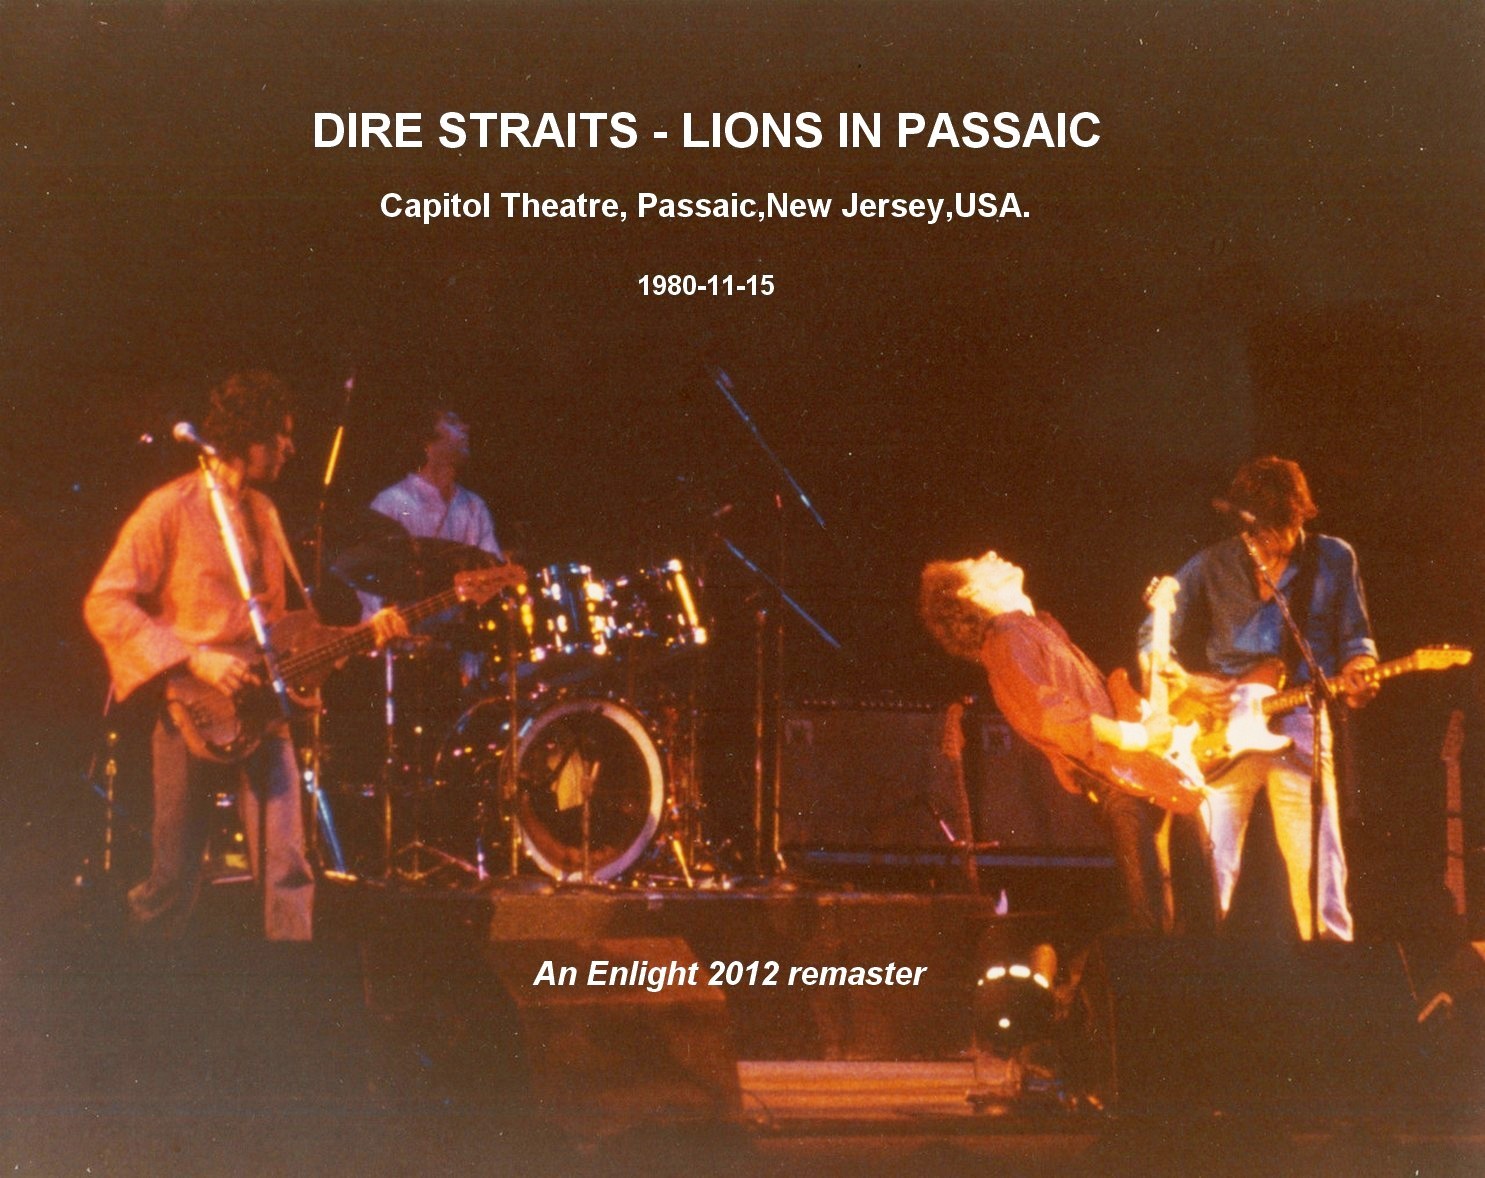 DireStraits1980-11-15CapitolTheatrePassaicNJ.jpg